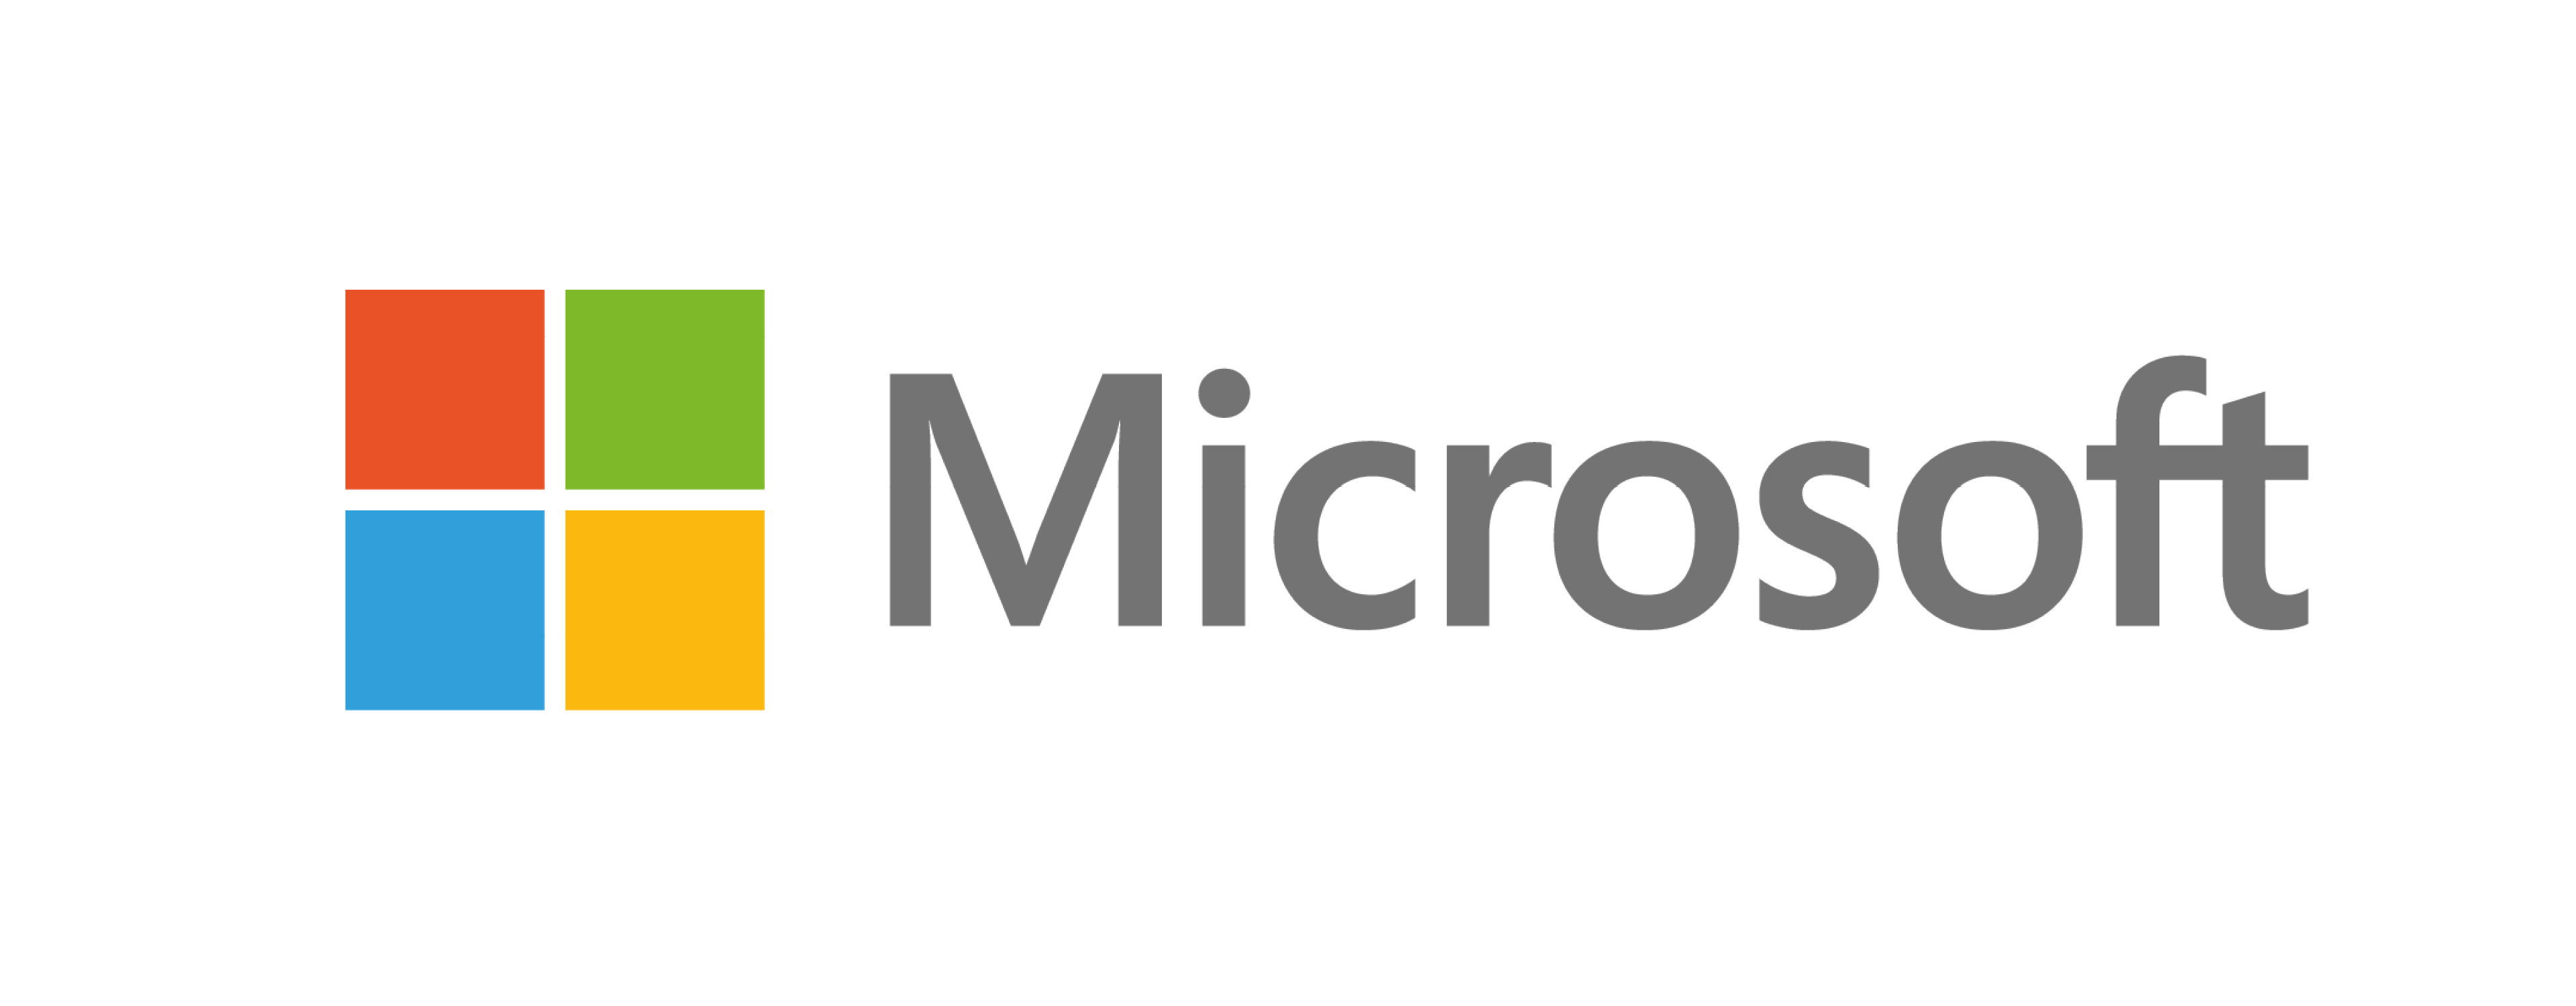 EY Microsoft logo